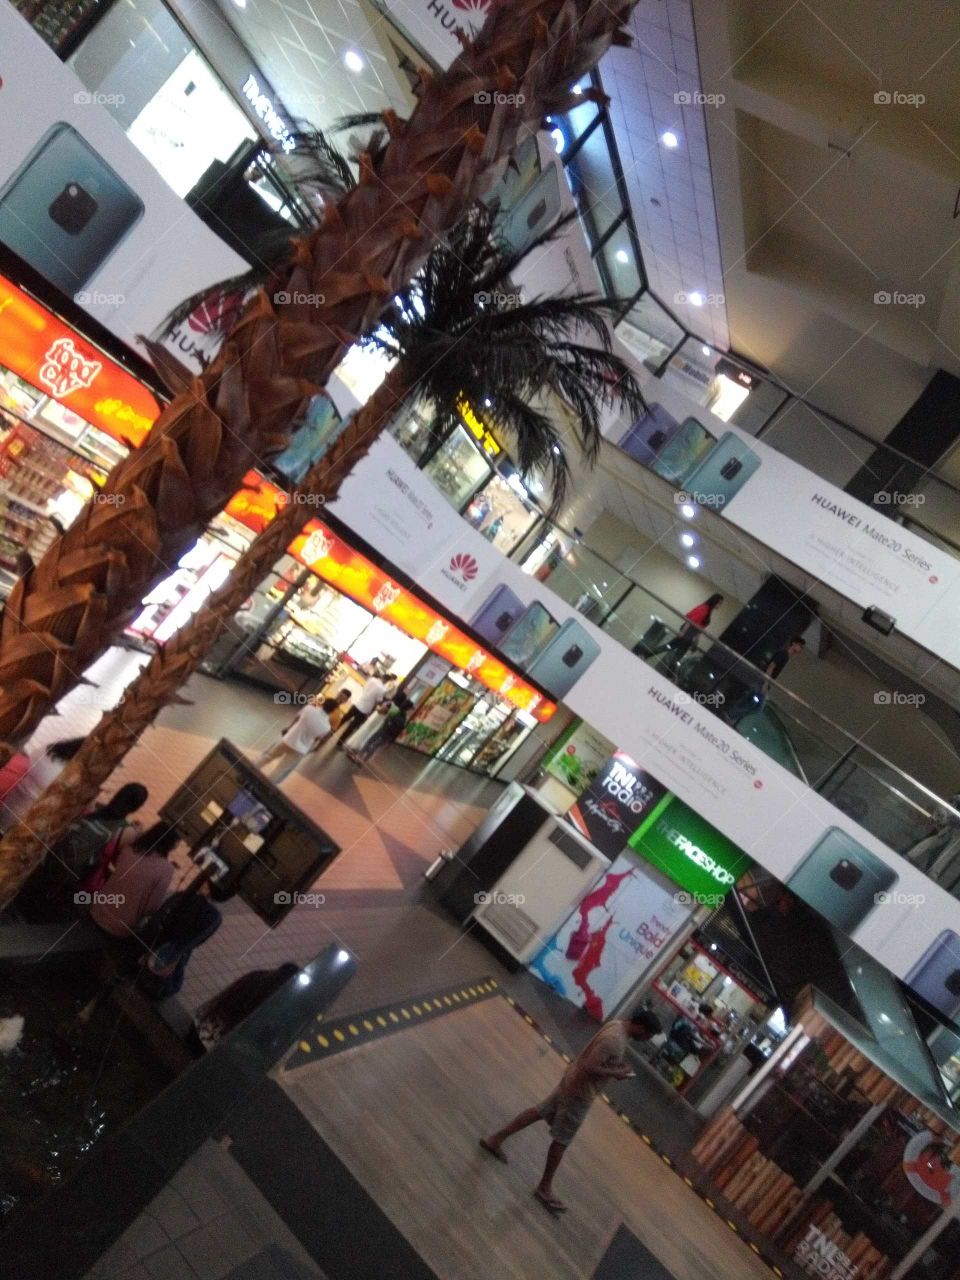 majestic city shopping mall in Sri Lanka 🥰